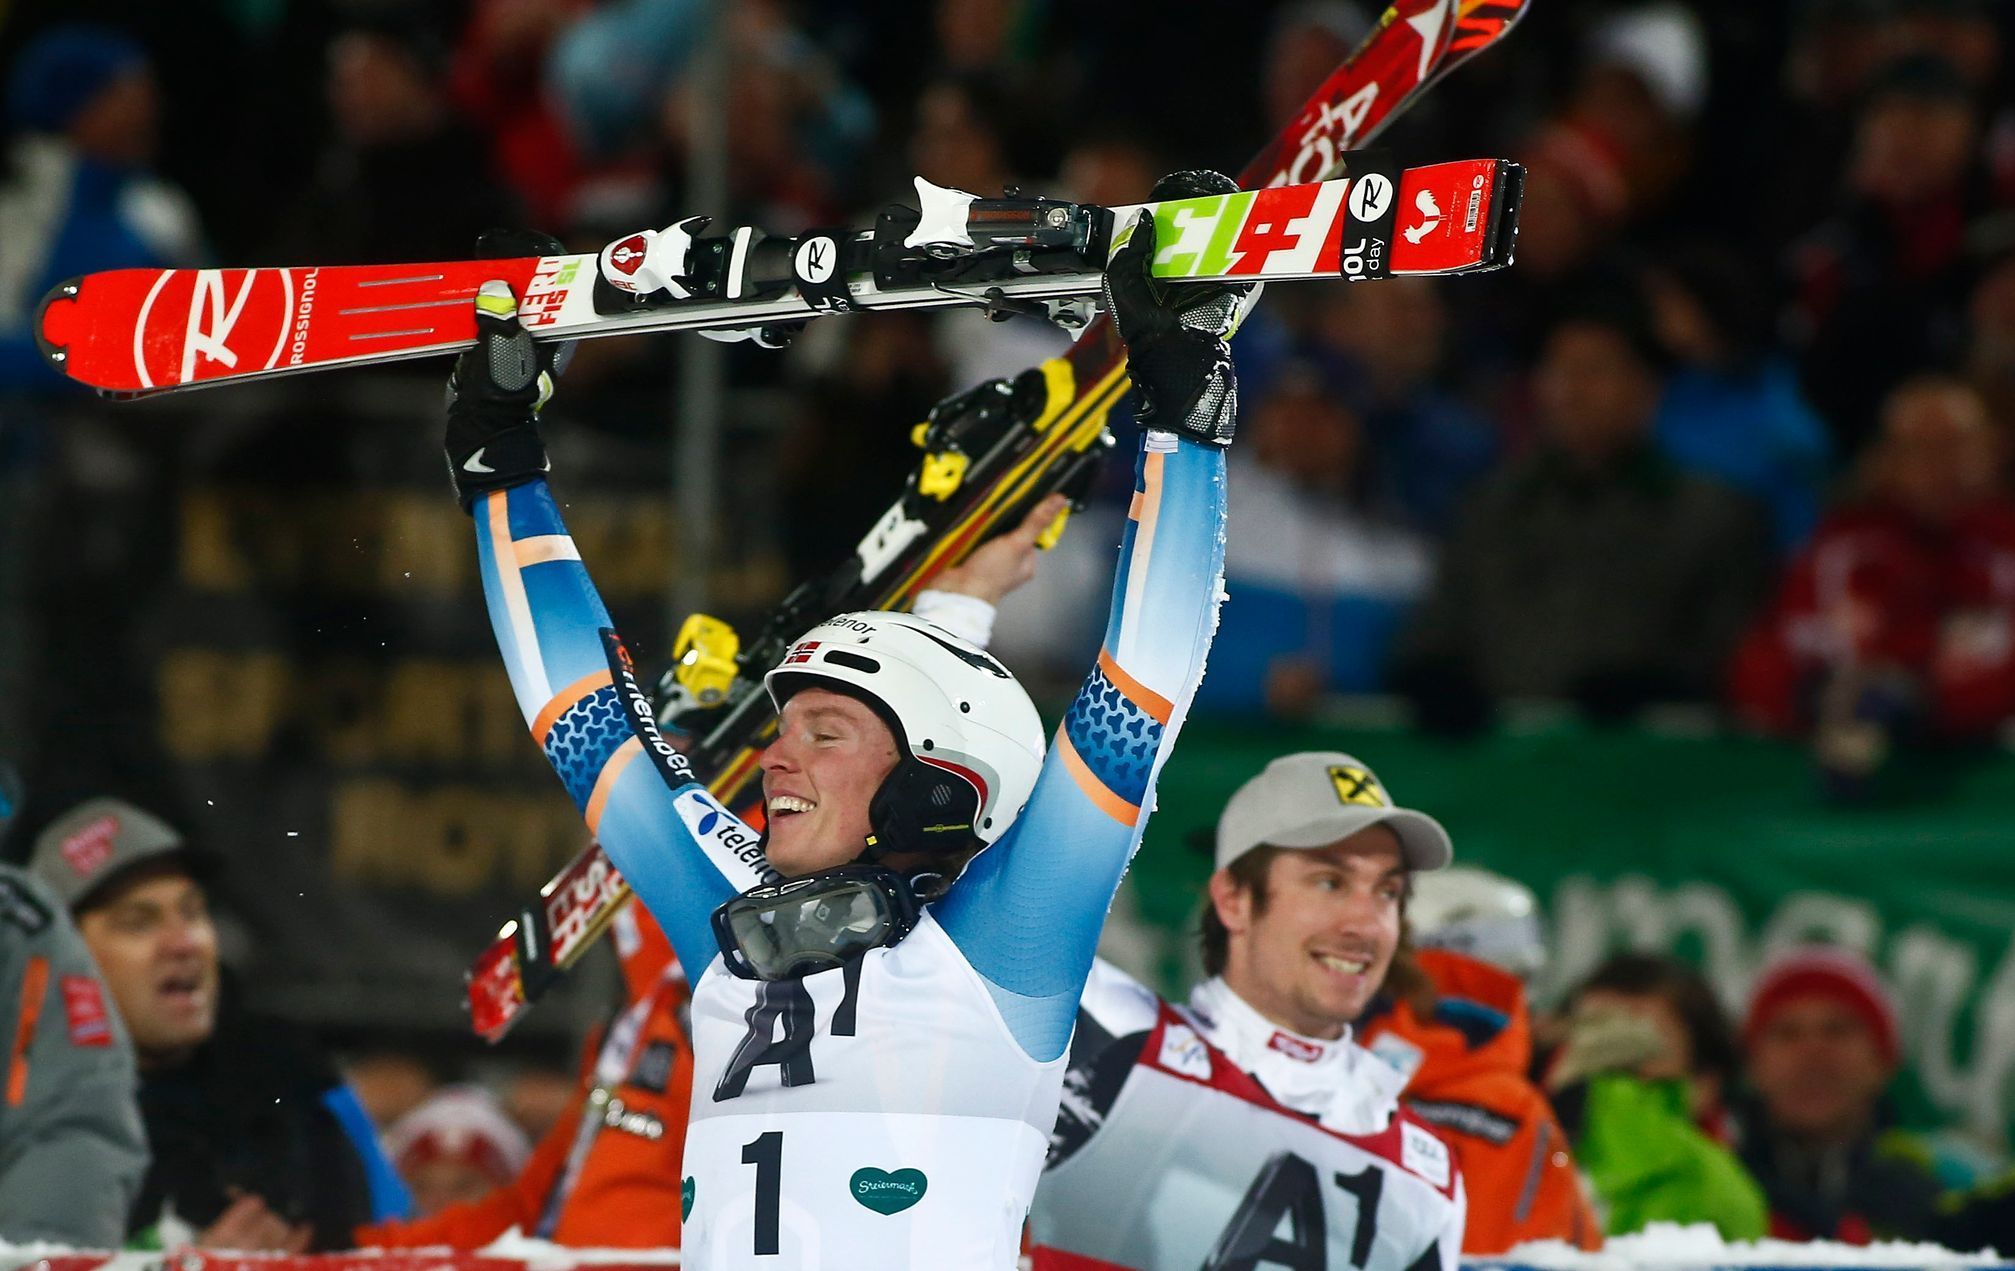 Kristoffersen of Norway reacts next to Austria's Hirscher after winning World Cup Men's Slalom race in Schladming